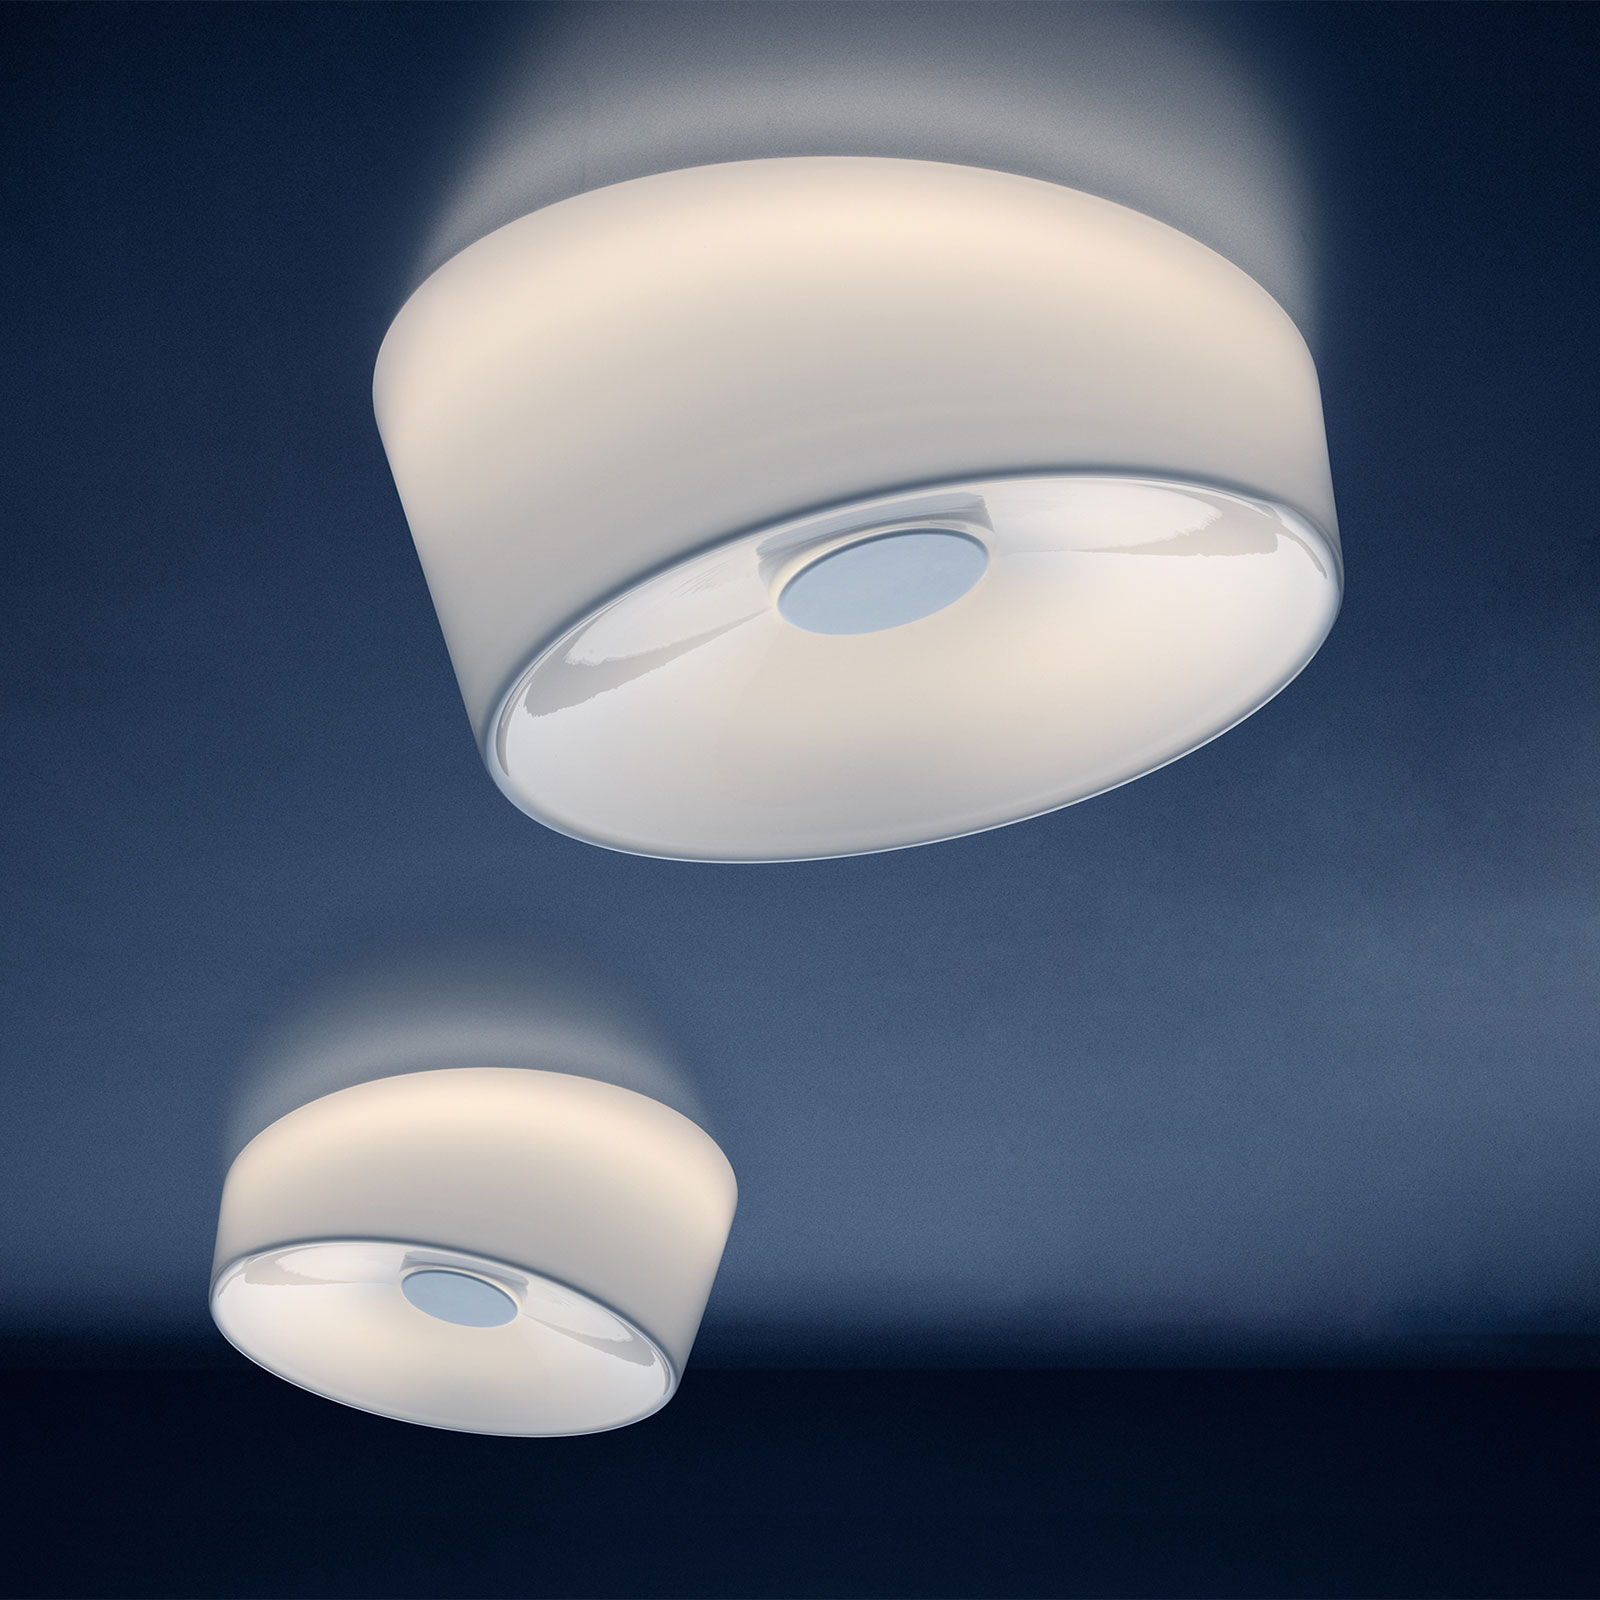 Foscarini Lumiere G9 ceiling light, Ø 24 cm, white